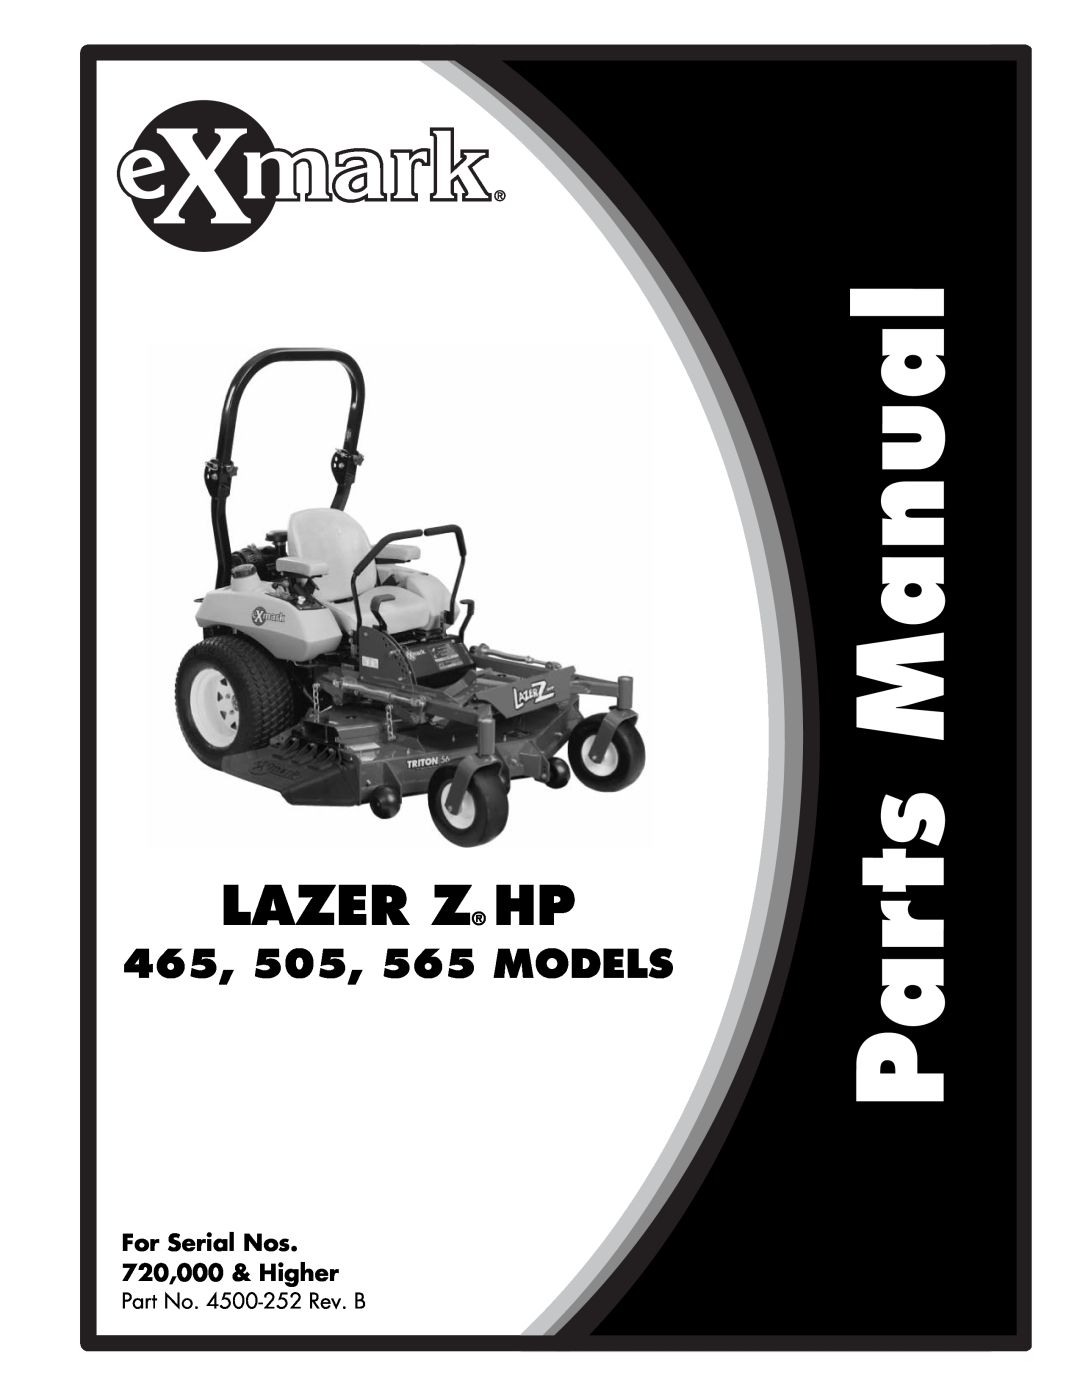 Exmark manual Lazer Z Hp, 465, 505, 565 MODELS, For Serial Nos 720,000 & Higher, Part No. 4500-252Rev. B 